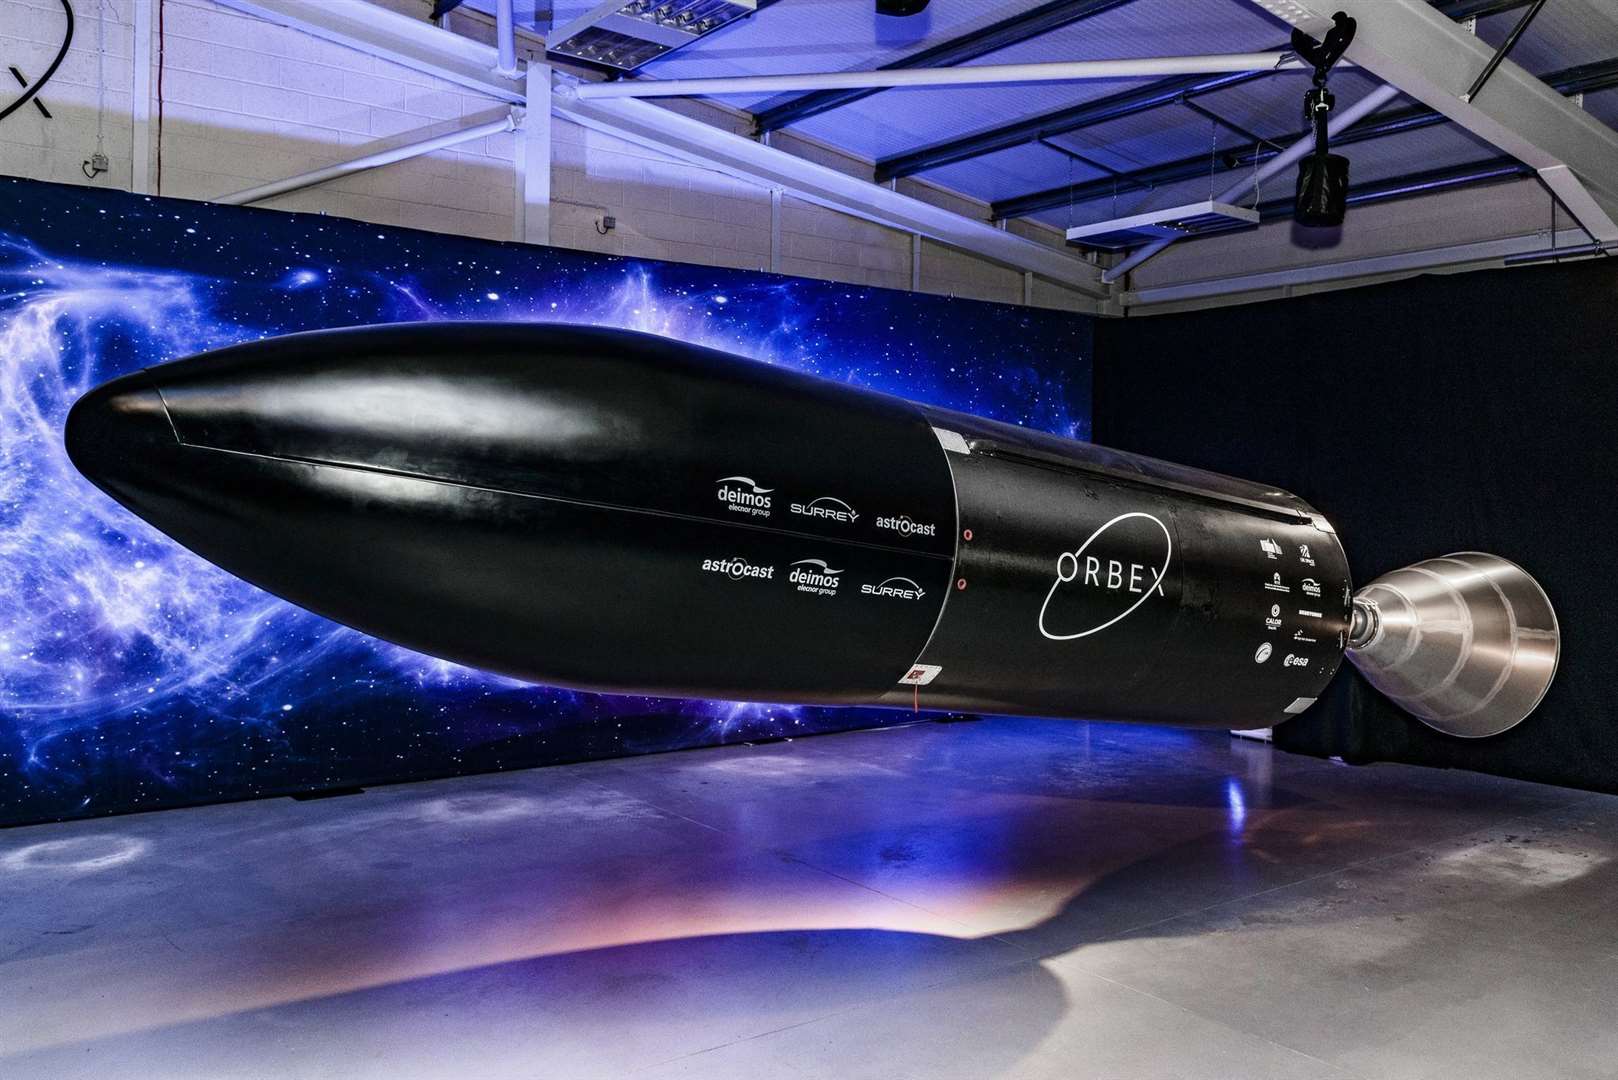 The Orbex Prime rocket. Photo courtesy of Orbex.